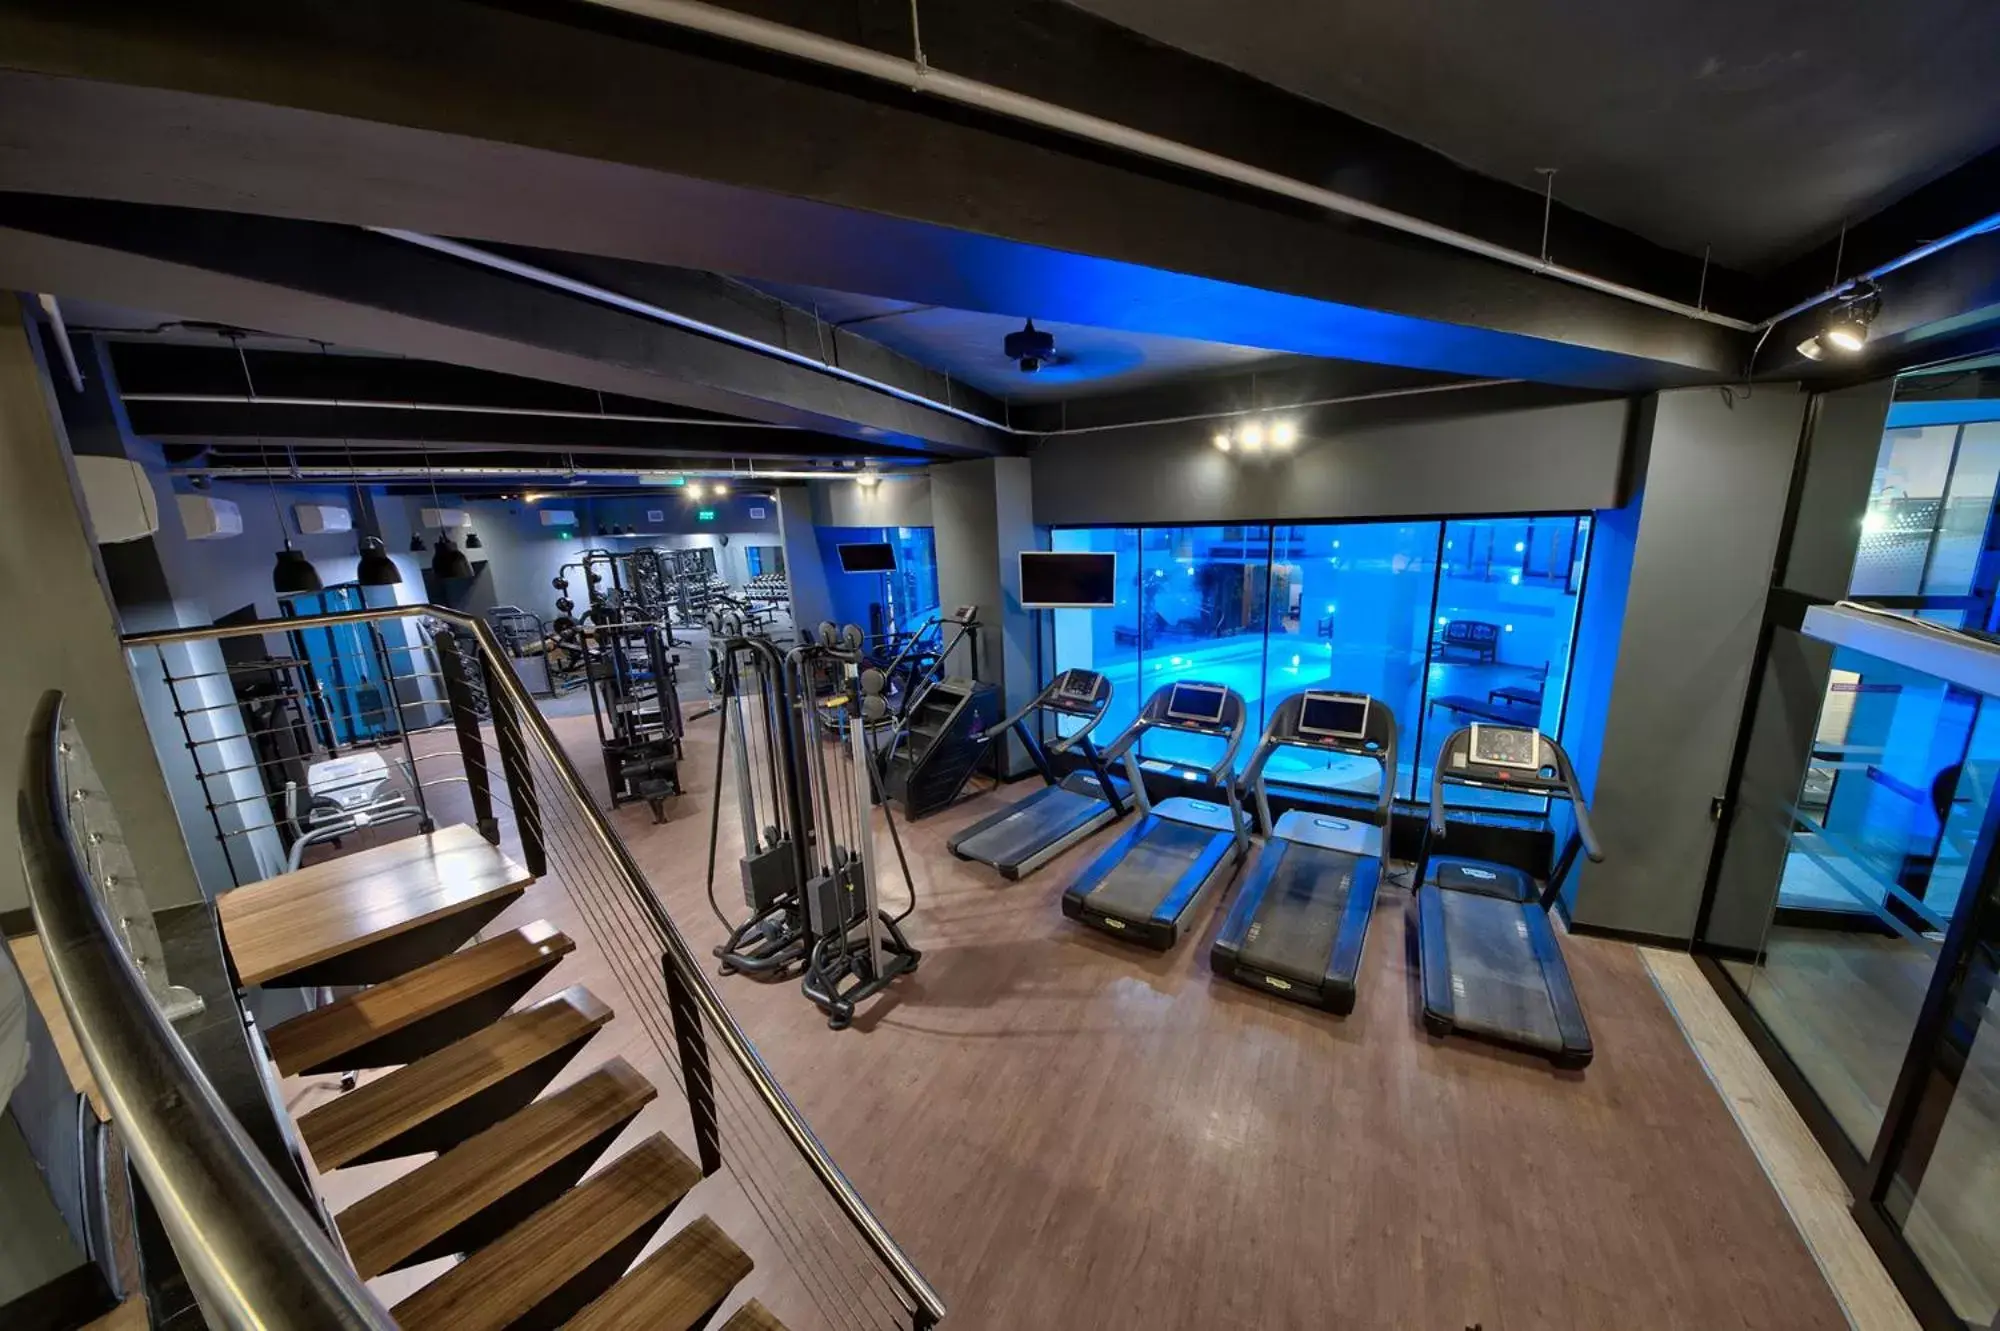 Fitness centre/facilities, Fitness Center/Facilities in The Preluna Hotel